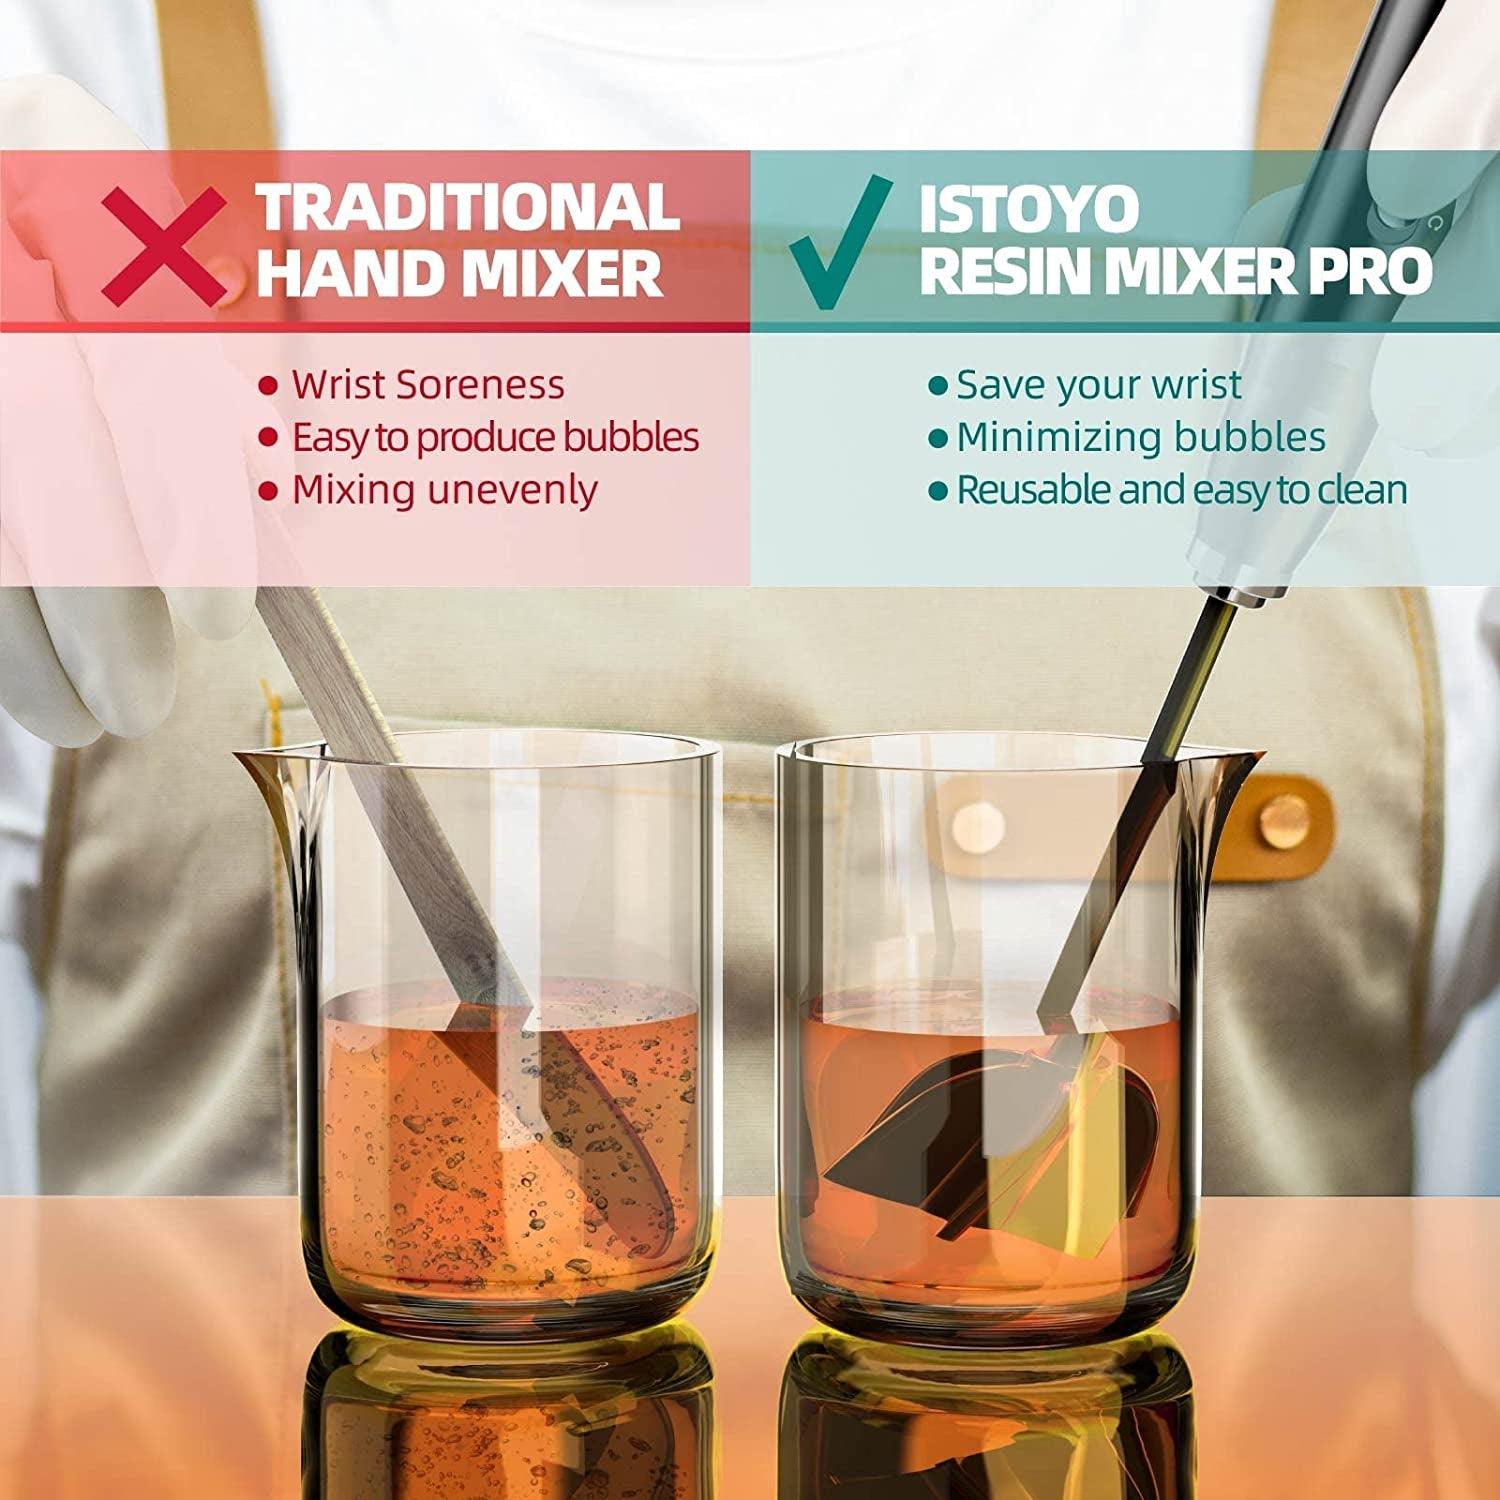 Epoxy Resin Mixer Silicone Paddles - 6 Reusable Pixiss